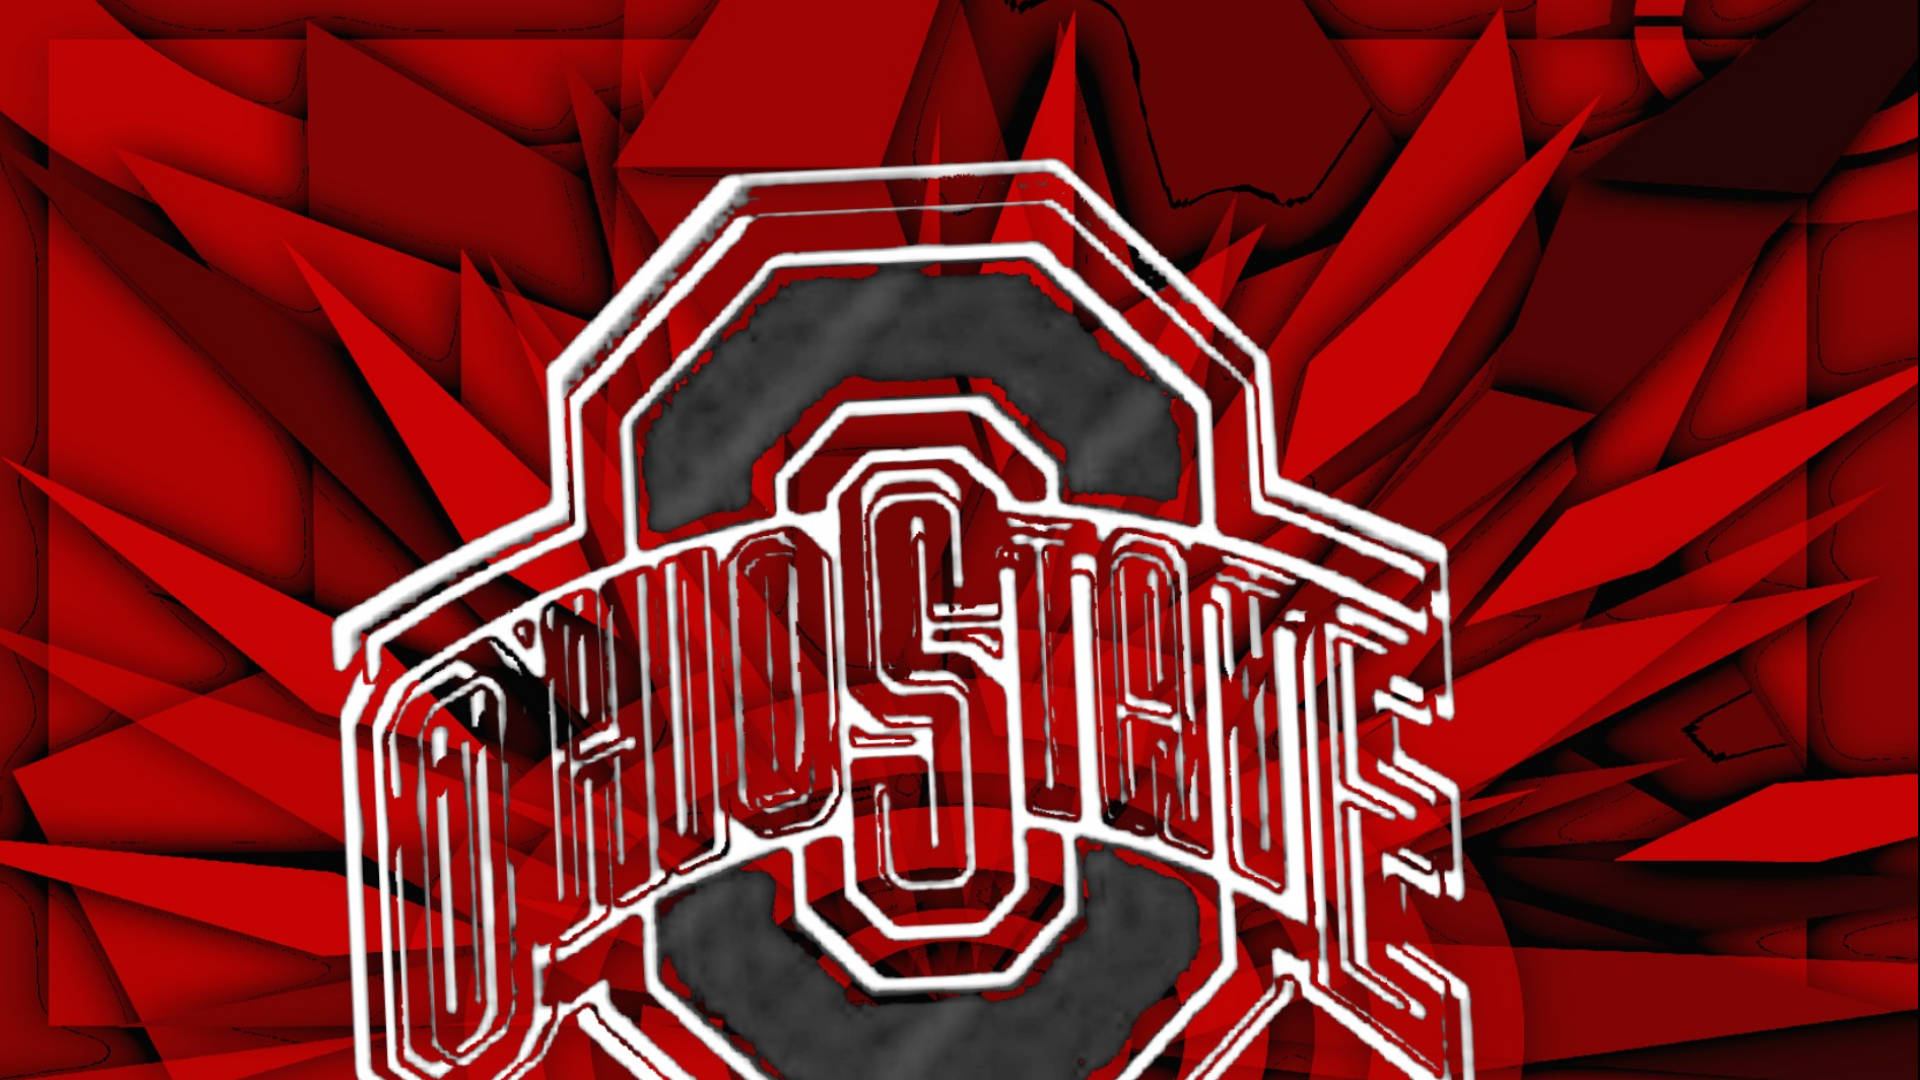 Ohio State Team Background